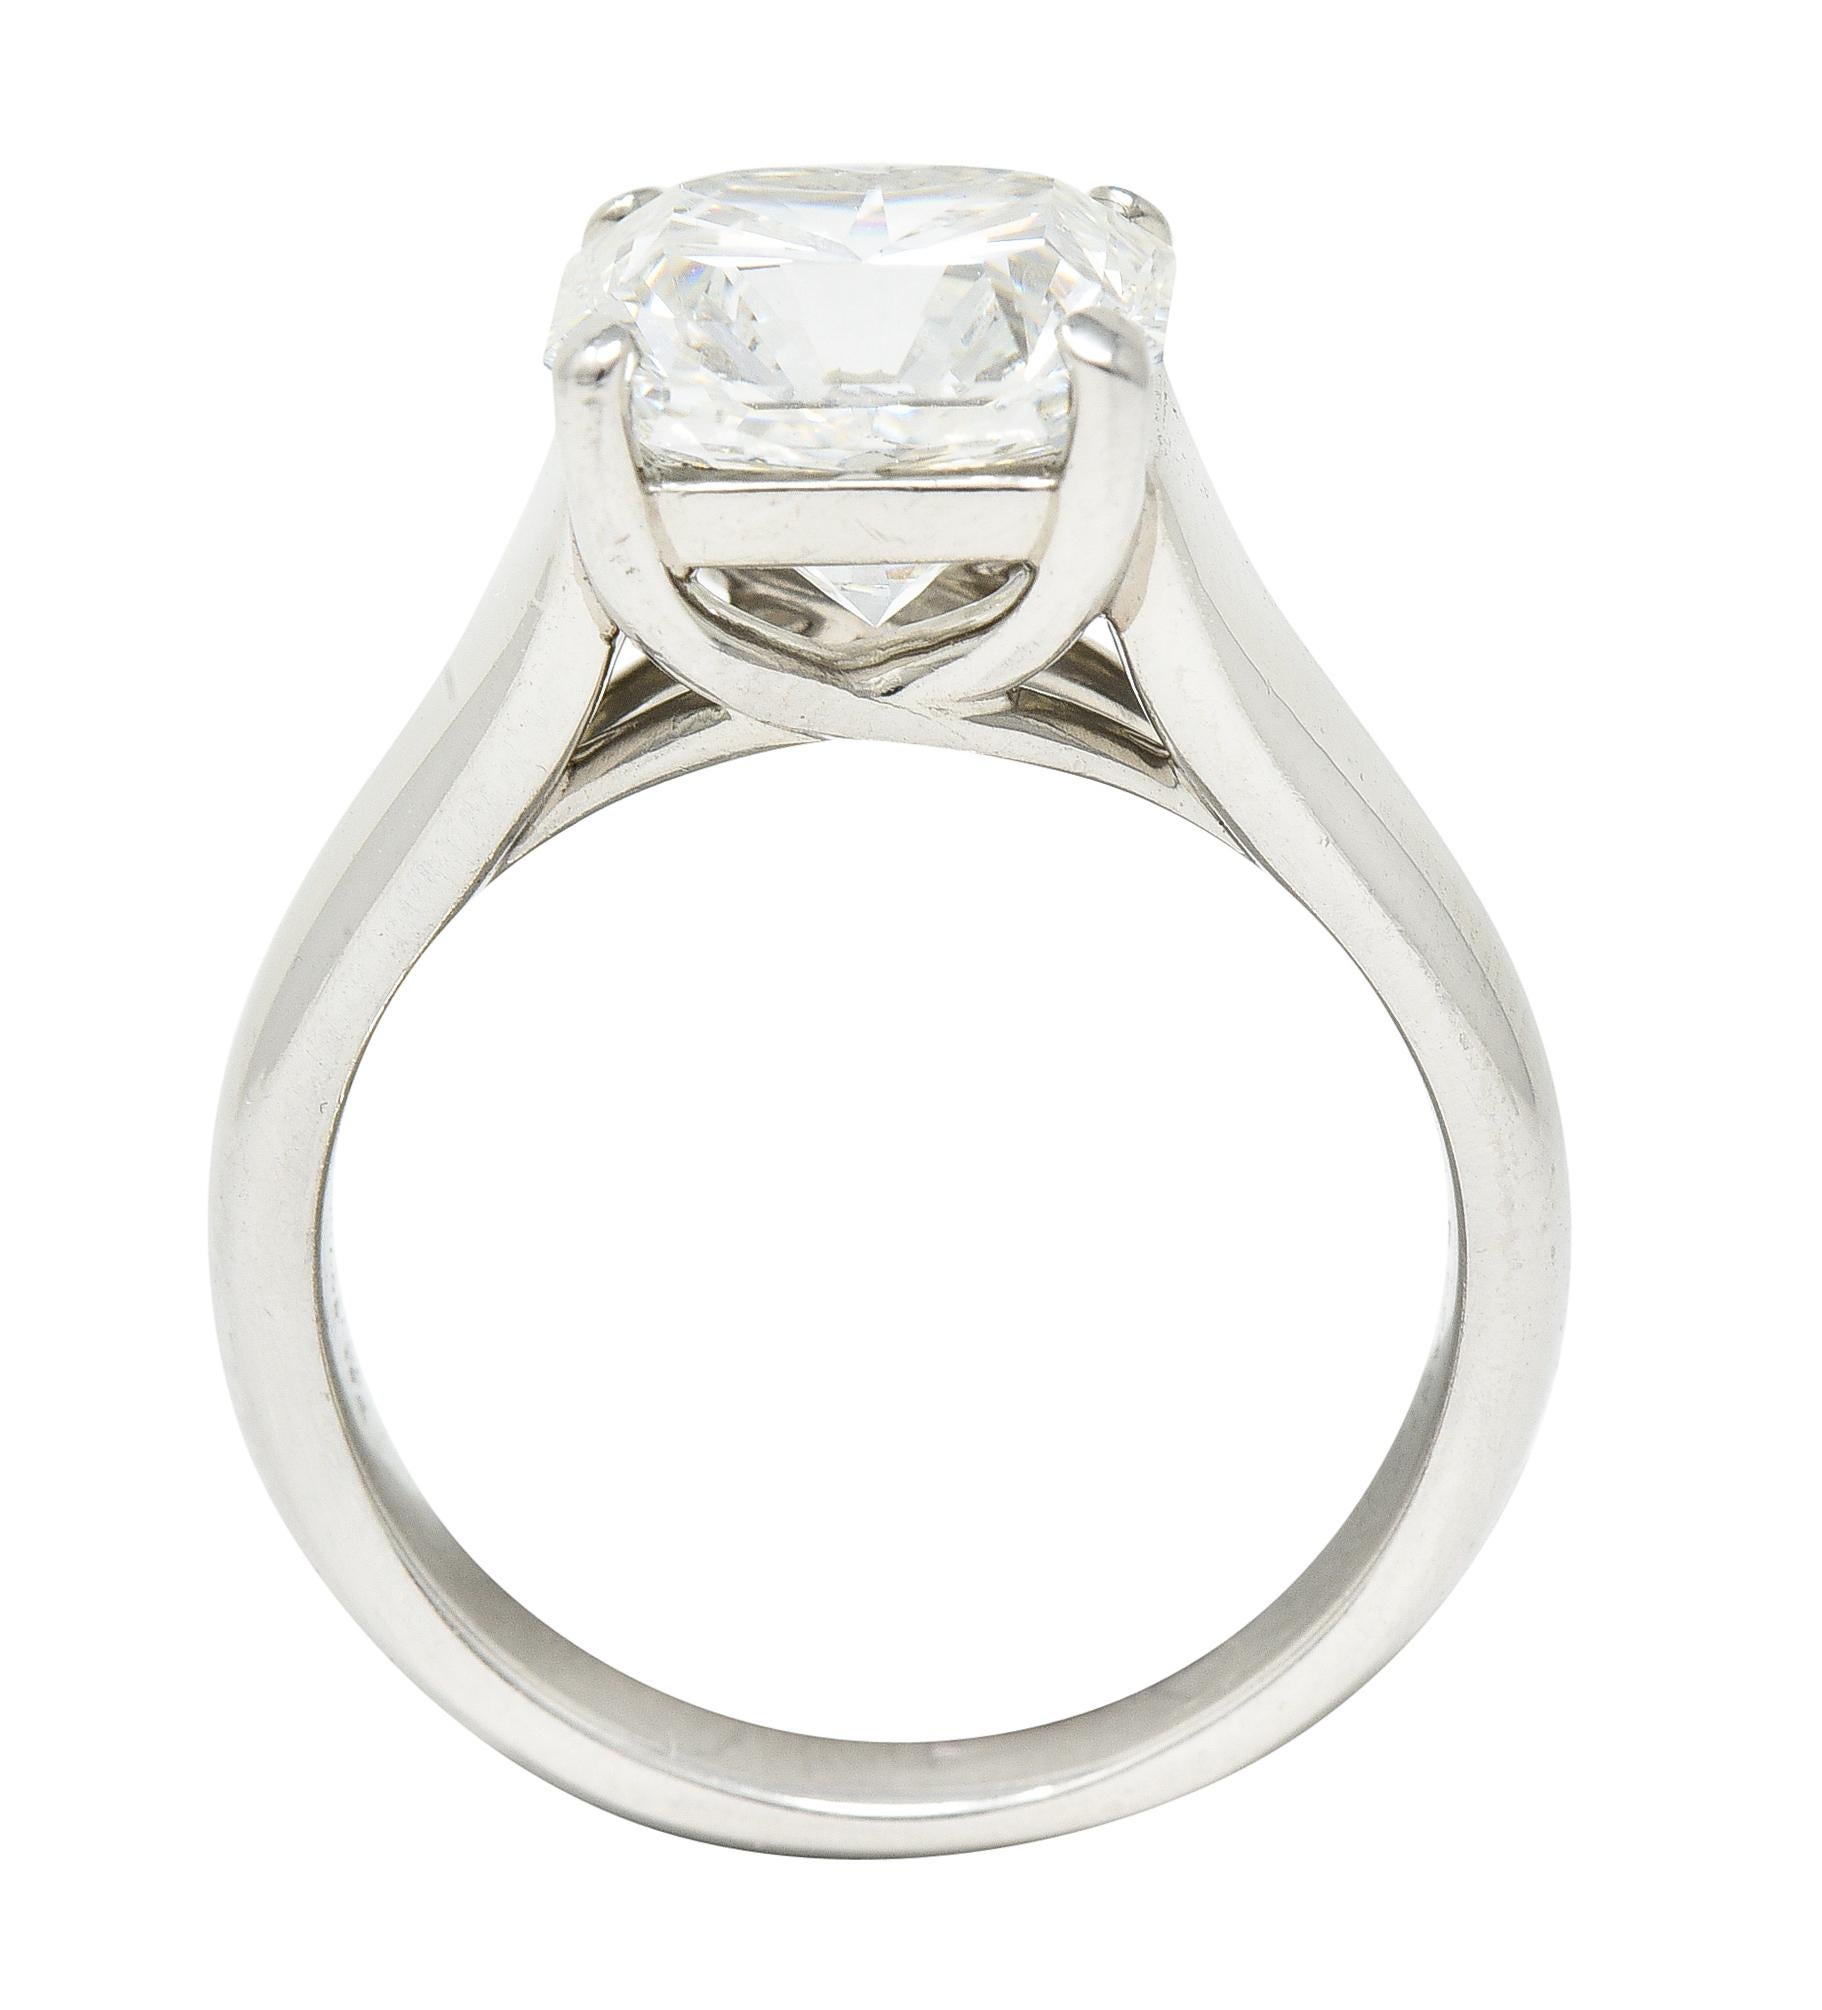 Tiffany & Co. 3.06 Carats Lucida Cut Diamond Platinum Solitaire Engagement Ring 1